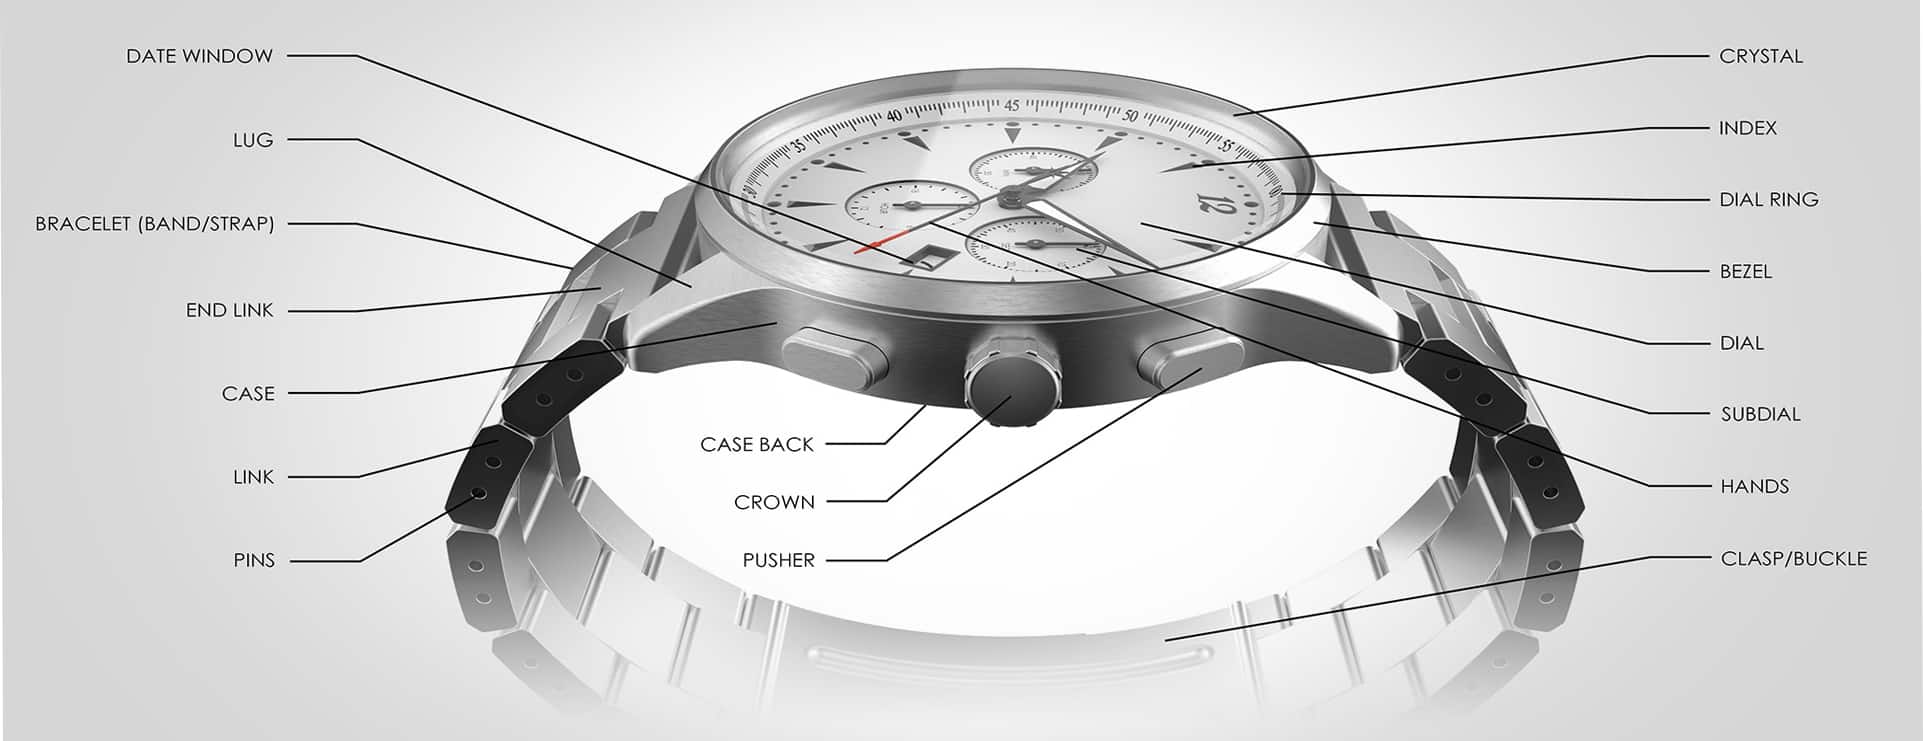 Installeren over Wiskundig How to Start a Watch Brand | Private Label Watch Design